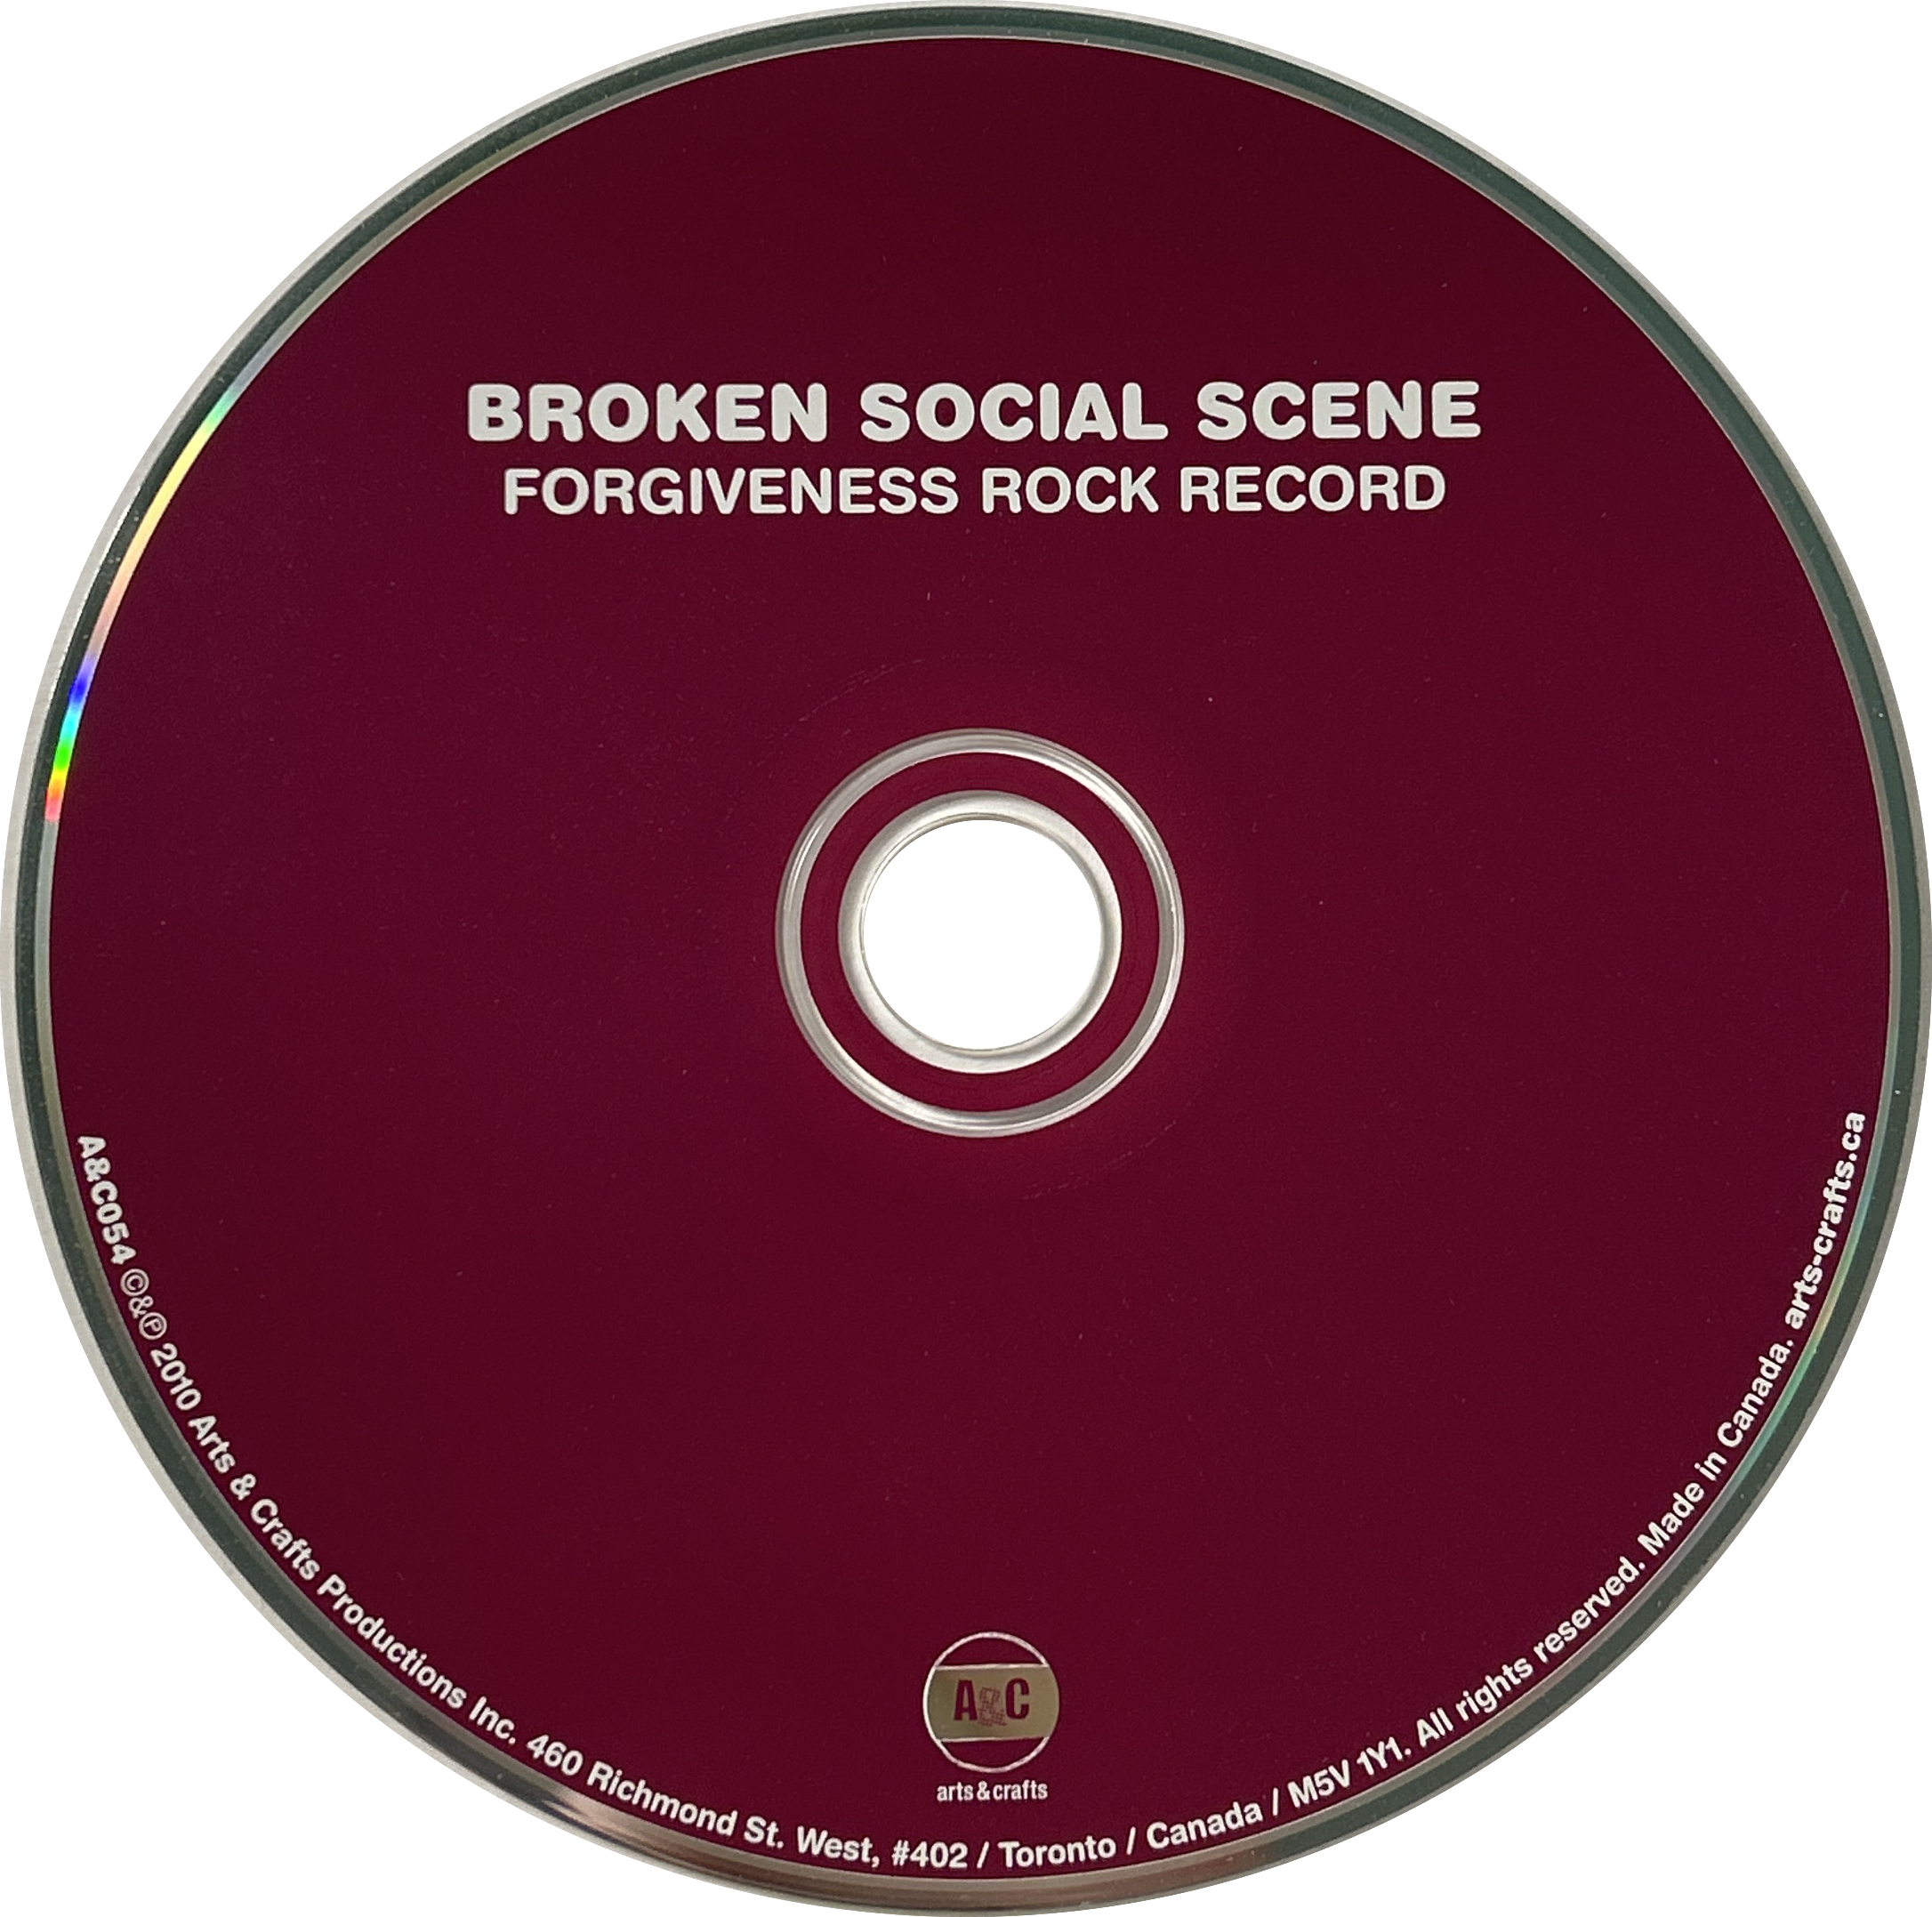 Forgiveness Rock Record by Broken Social Scene